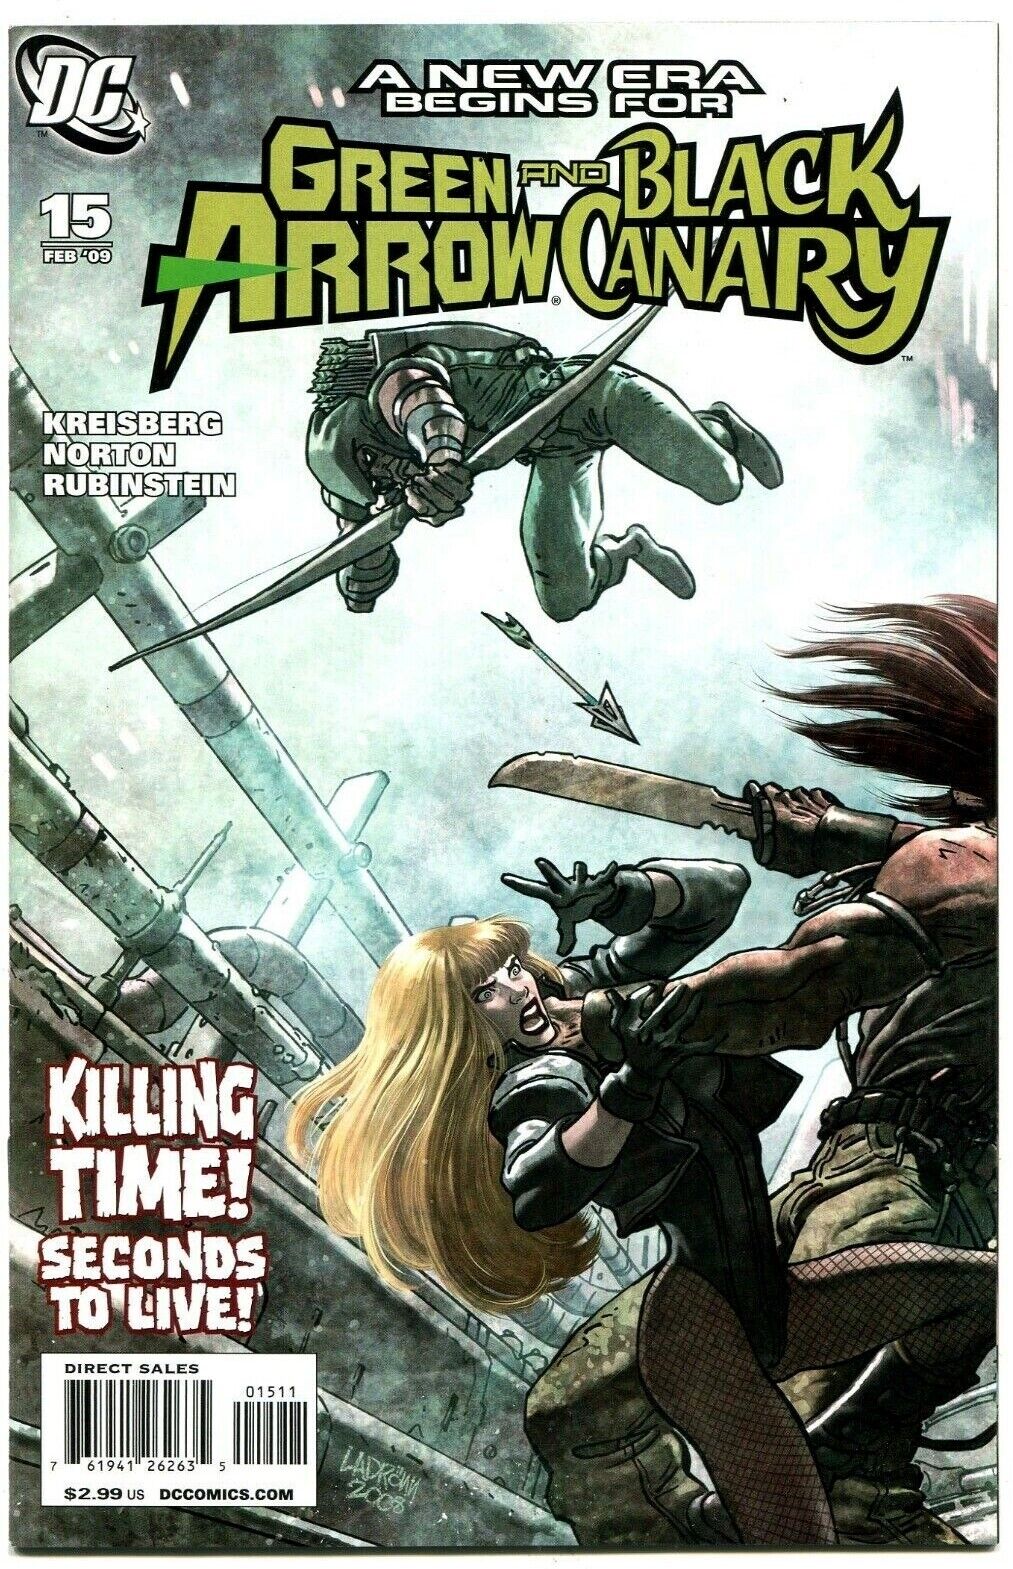 GREEN ARROW / BLACK CANARY #15 FEB 2009 BATMAN WONDER WOMAN DC COMIC BOOK 1